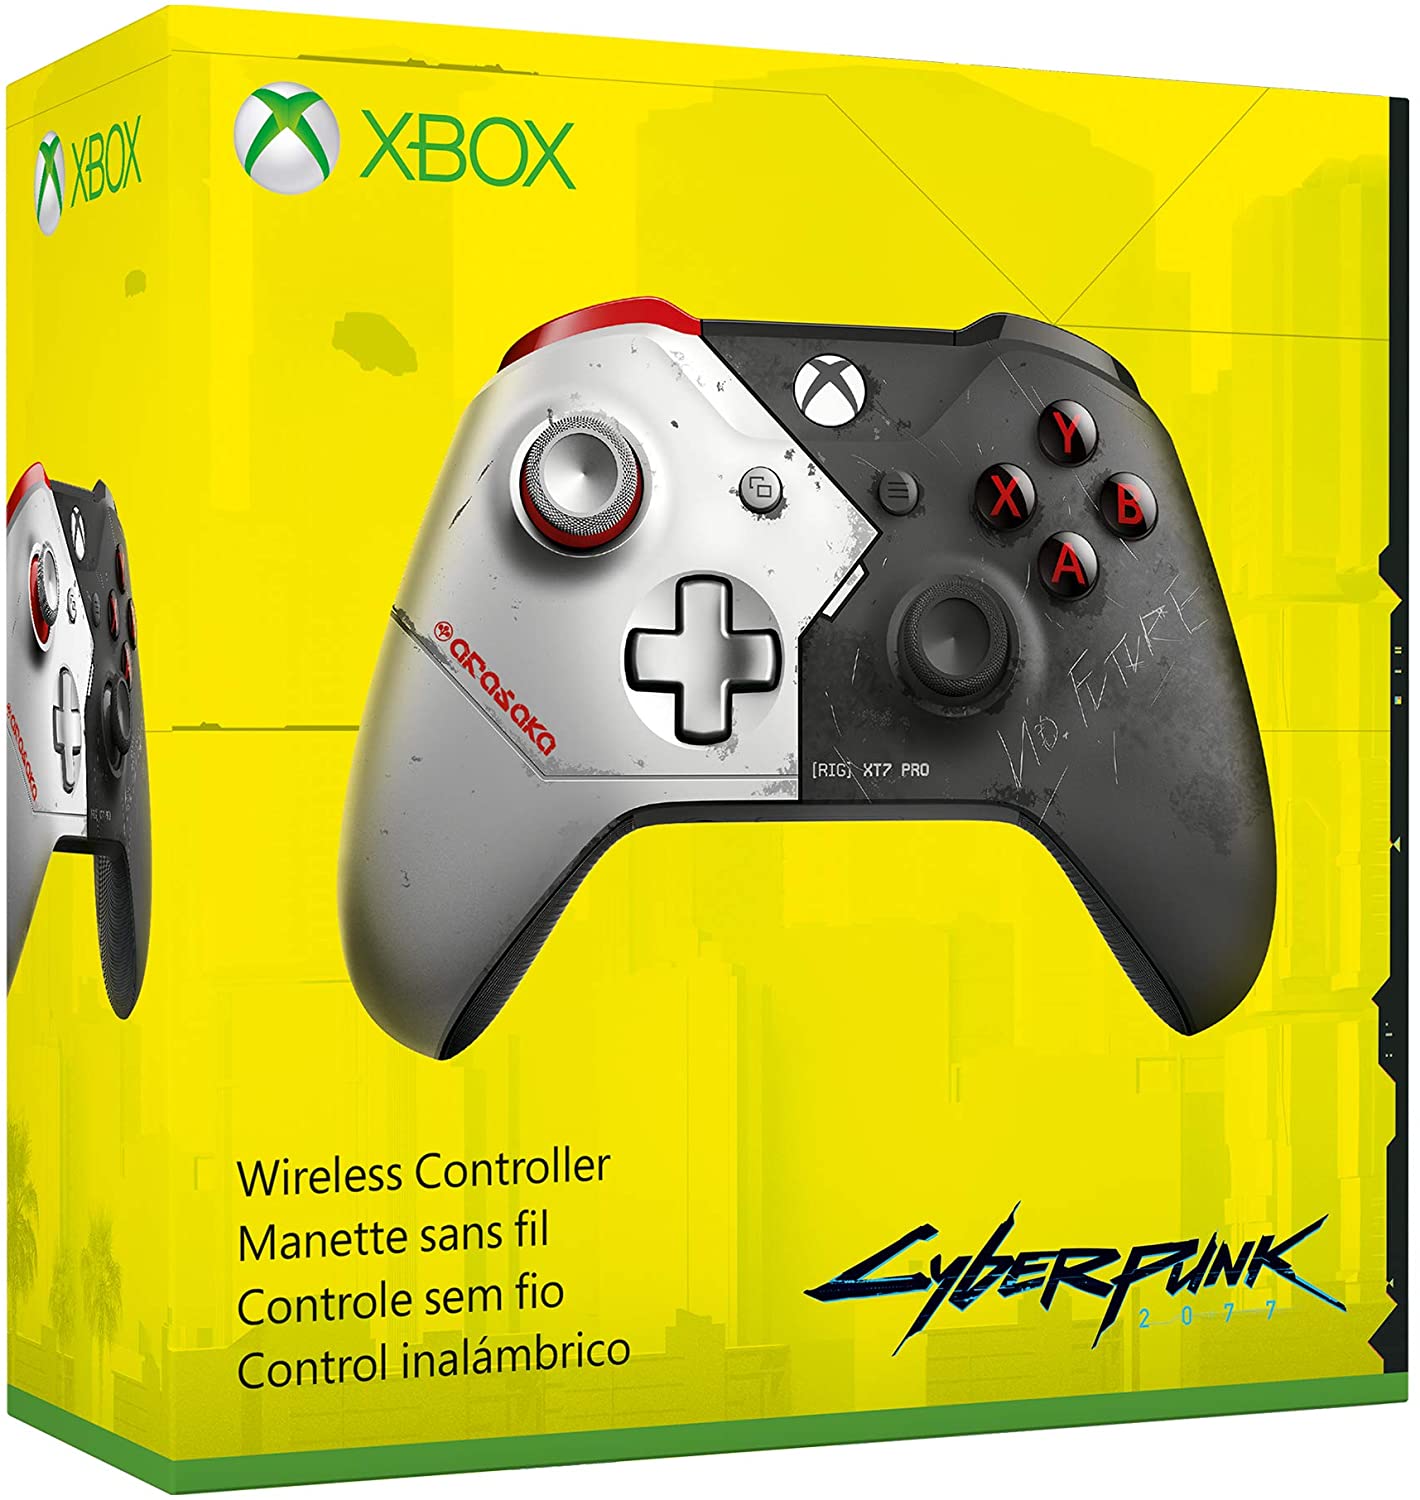 Cyberpunk Xbox One controller